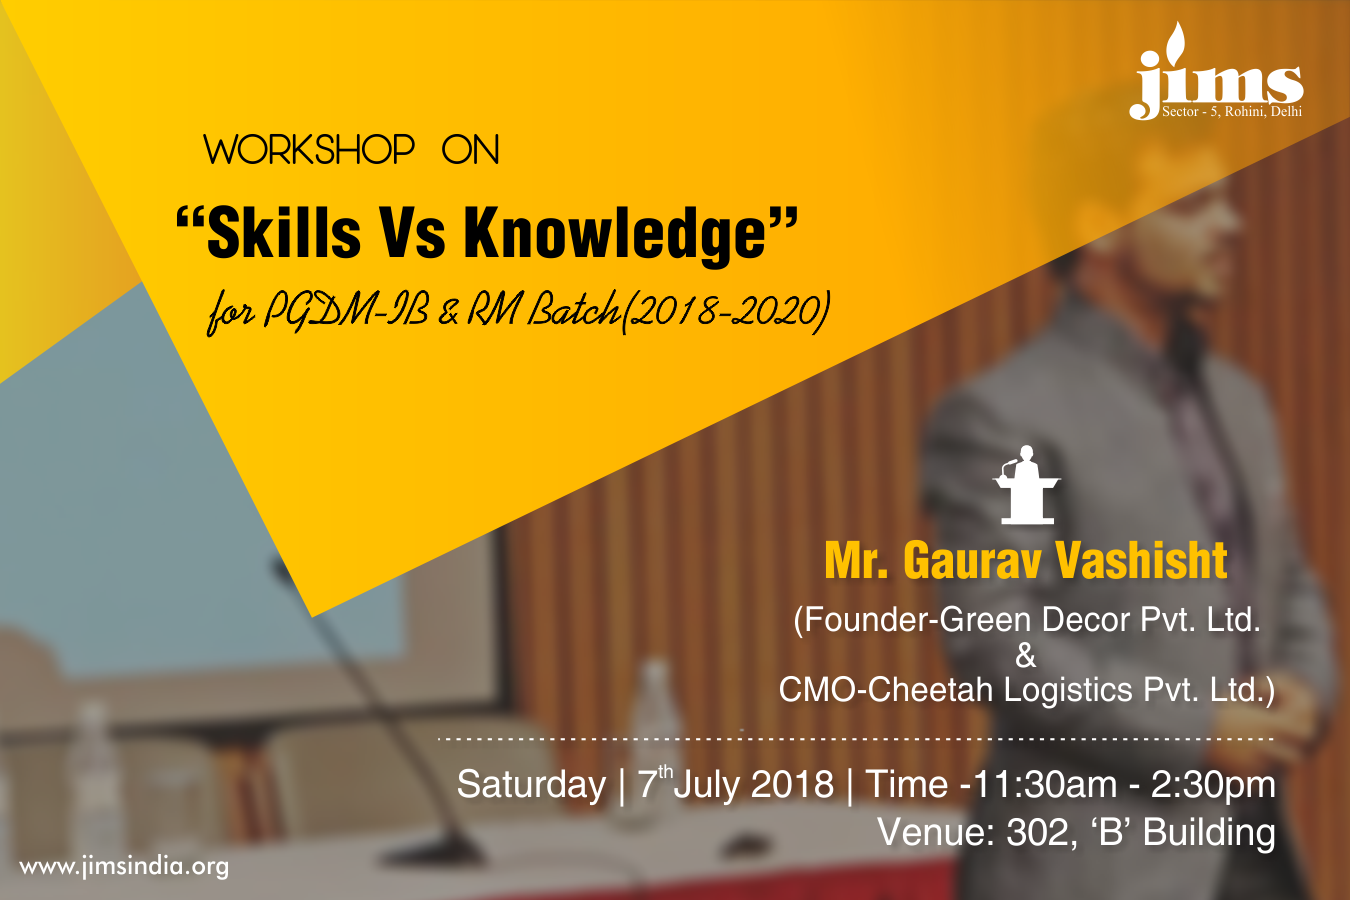 JIMSRohini is organizing a Workshop on Skills Vs Knowledge By Mr. Gaurav Vashisht (Founder-Green Decor Pvt. Ltd. & CMO-Cheetah Logistics Pvt. Ltd.) on 7th July 2018 at 11:30am to 2:30pm @ JIMS Rohini